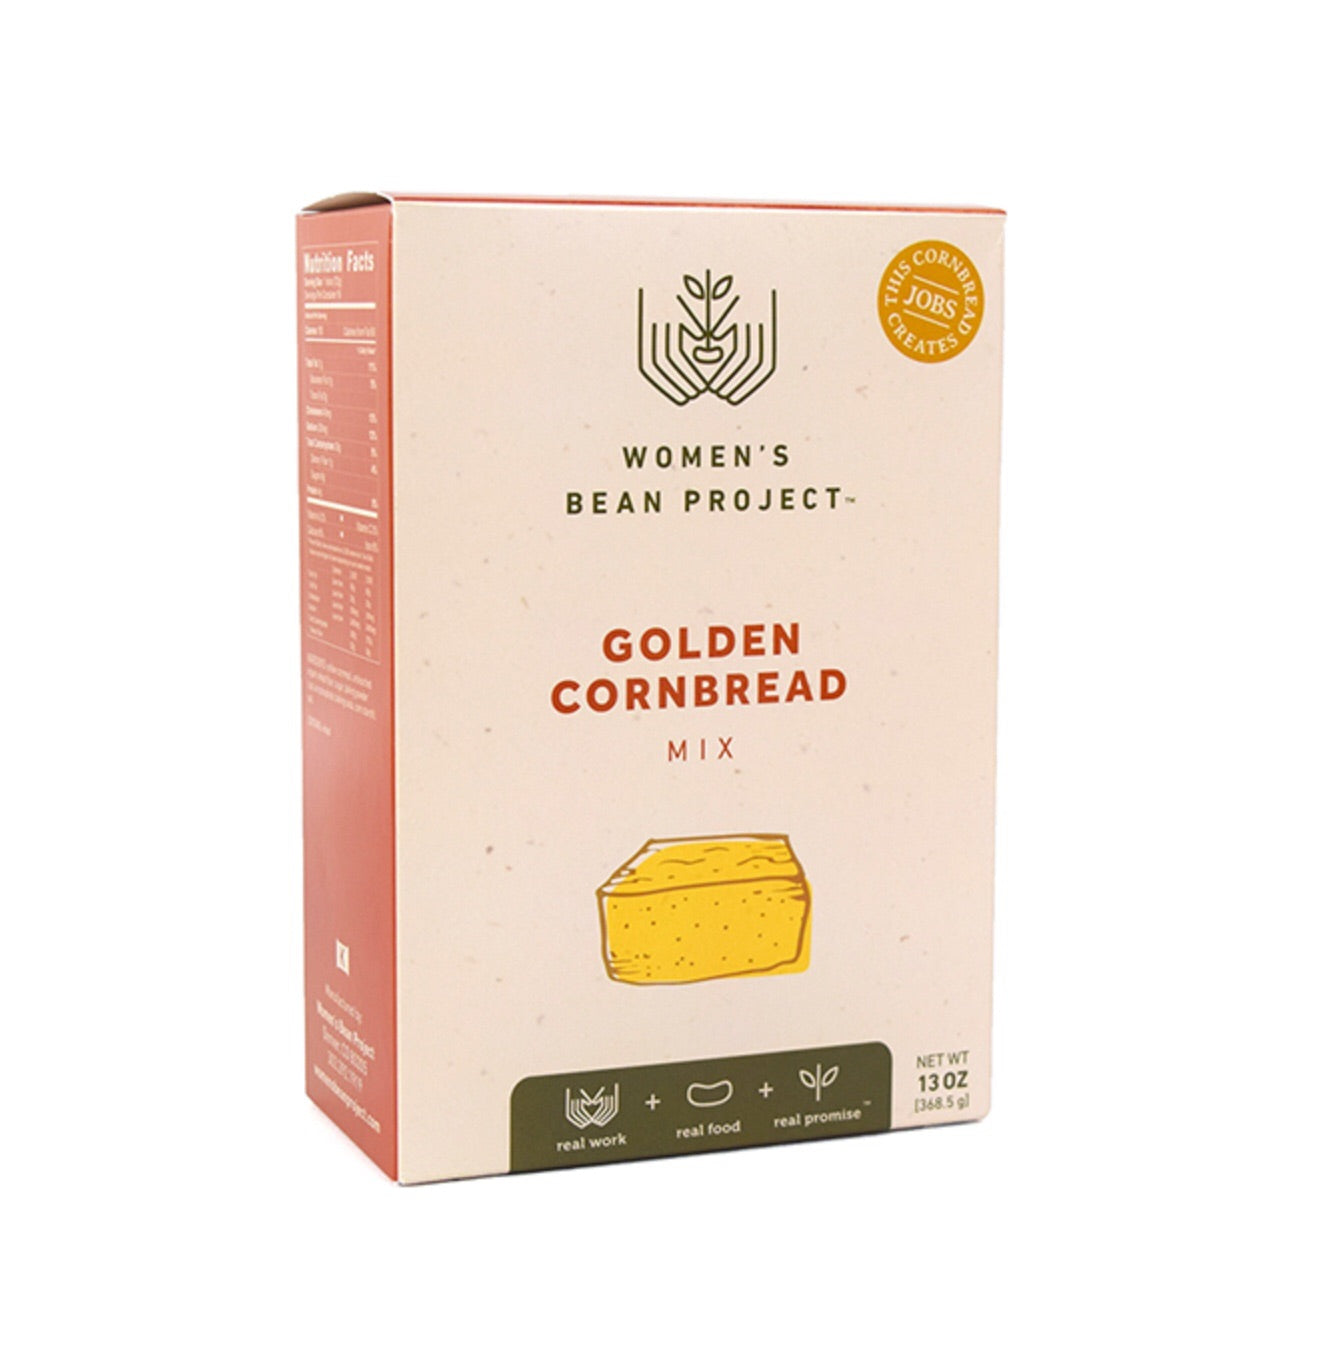 Golden Cornbread - CJ Gift Shoppe